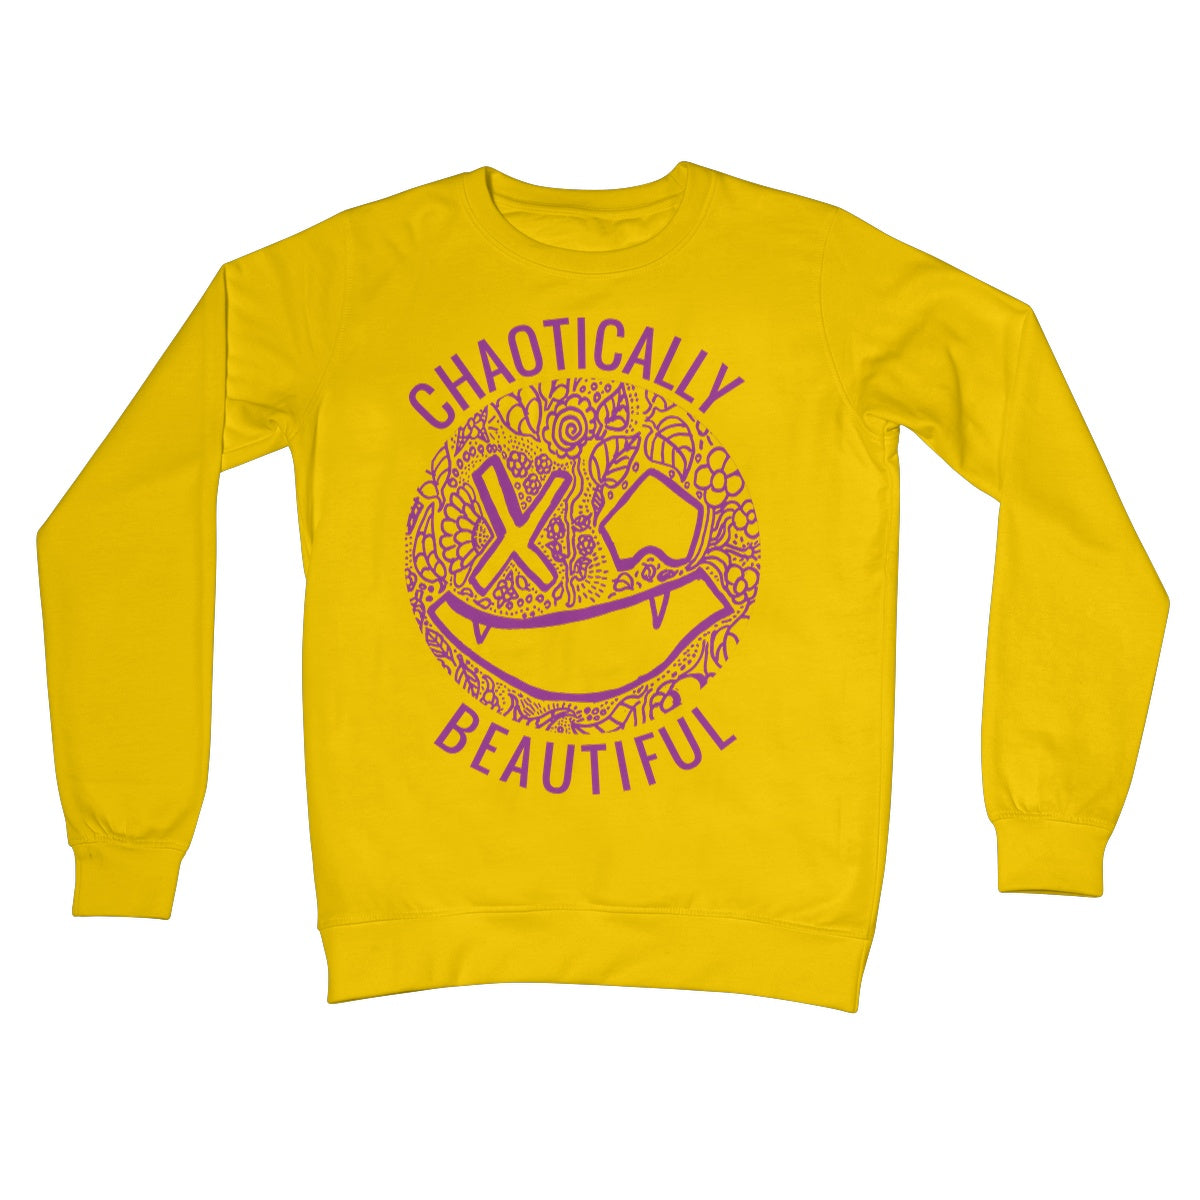 Crew Neck Sweatshirt - Chaotically Beautiful